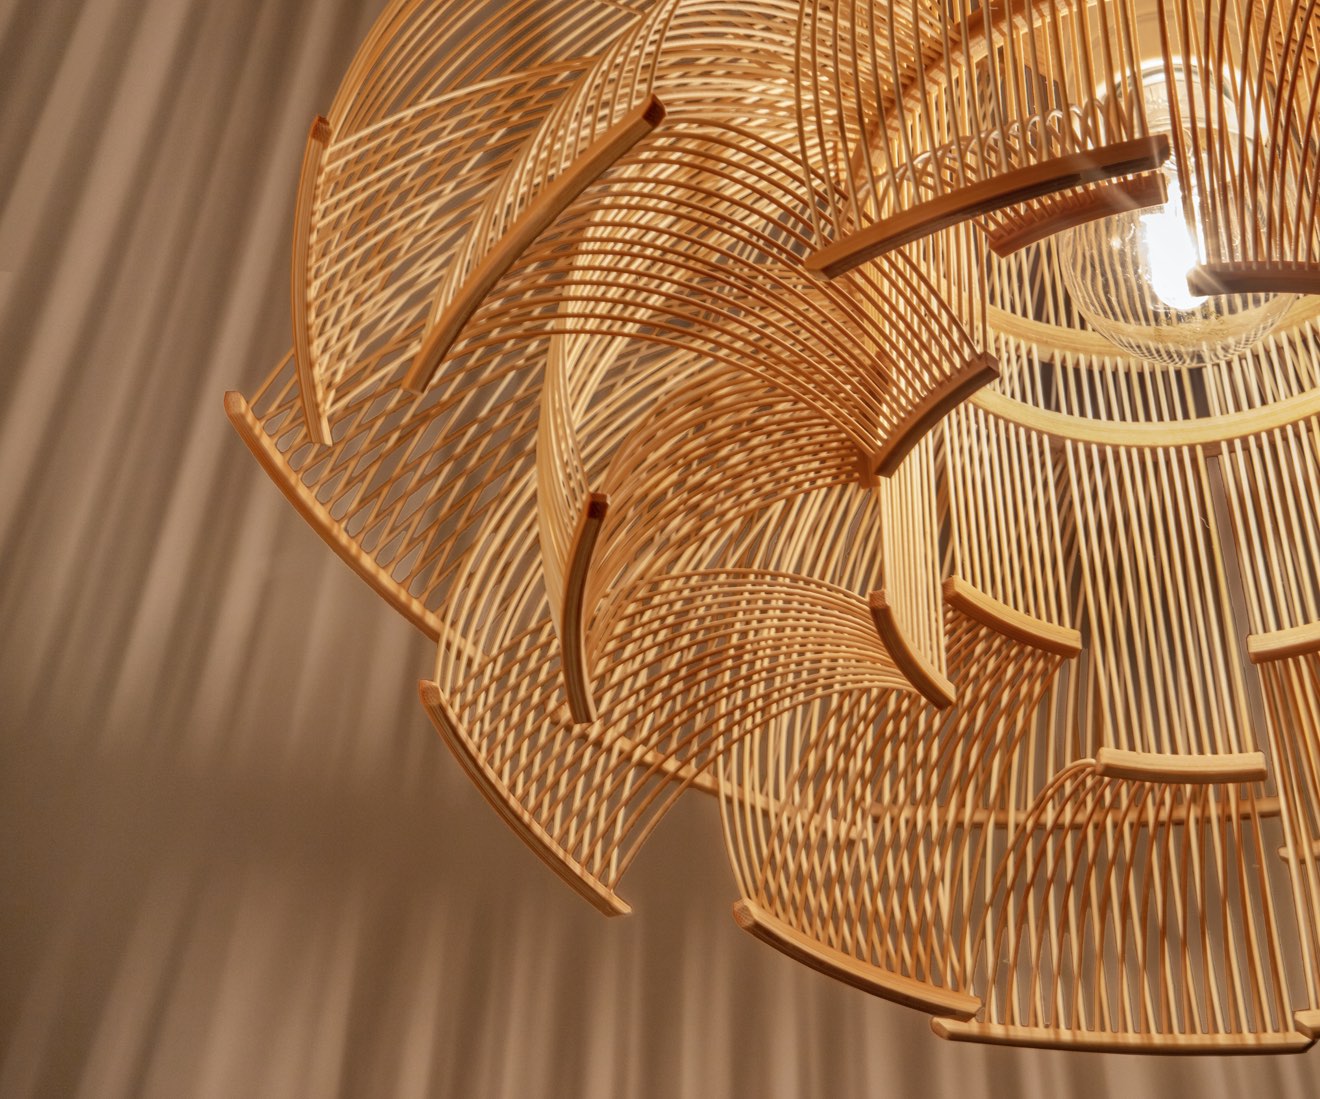 Sublime craftsmanship - handmade bamboo lamps